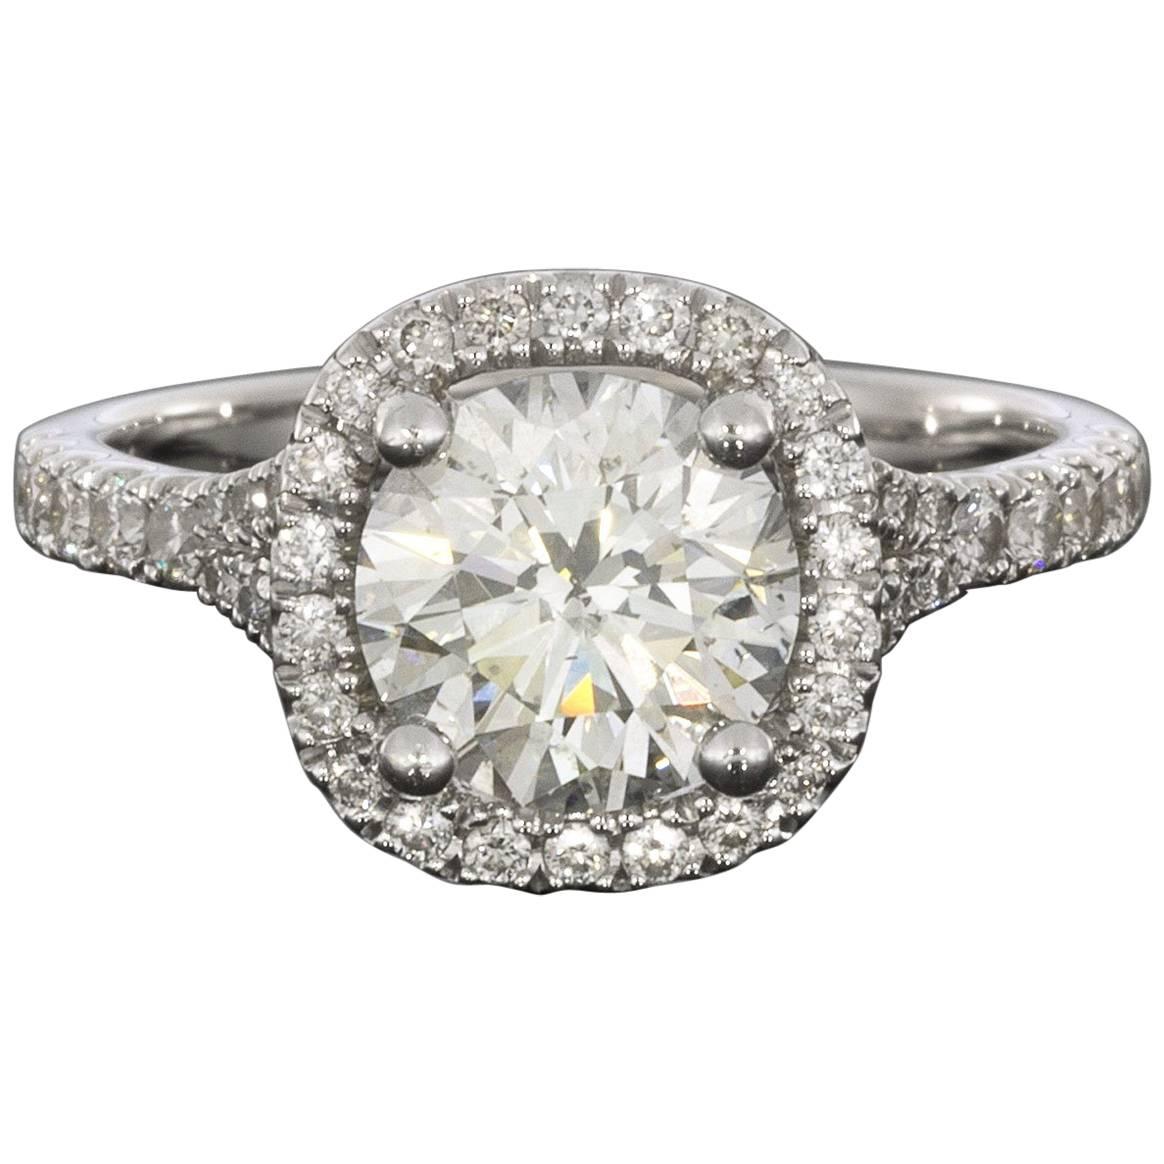 White Gold 1.94 Carat Round Diamond Engagement Ring